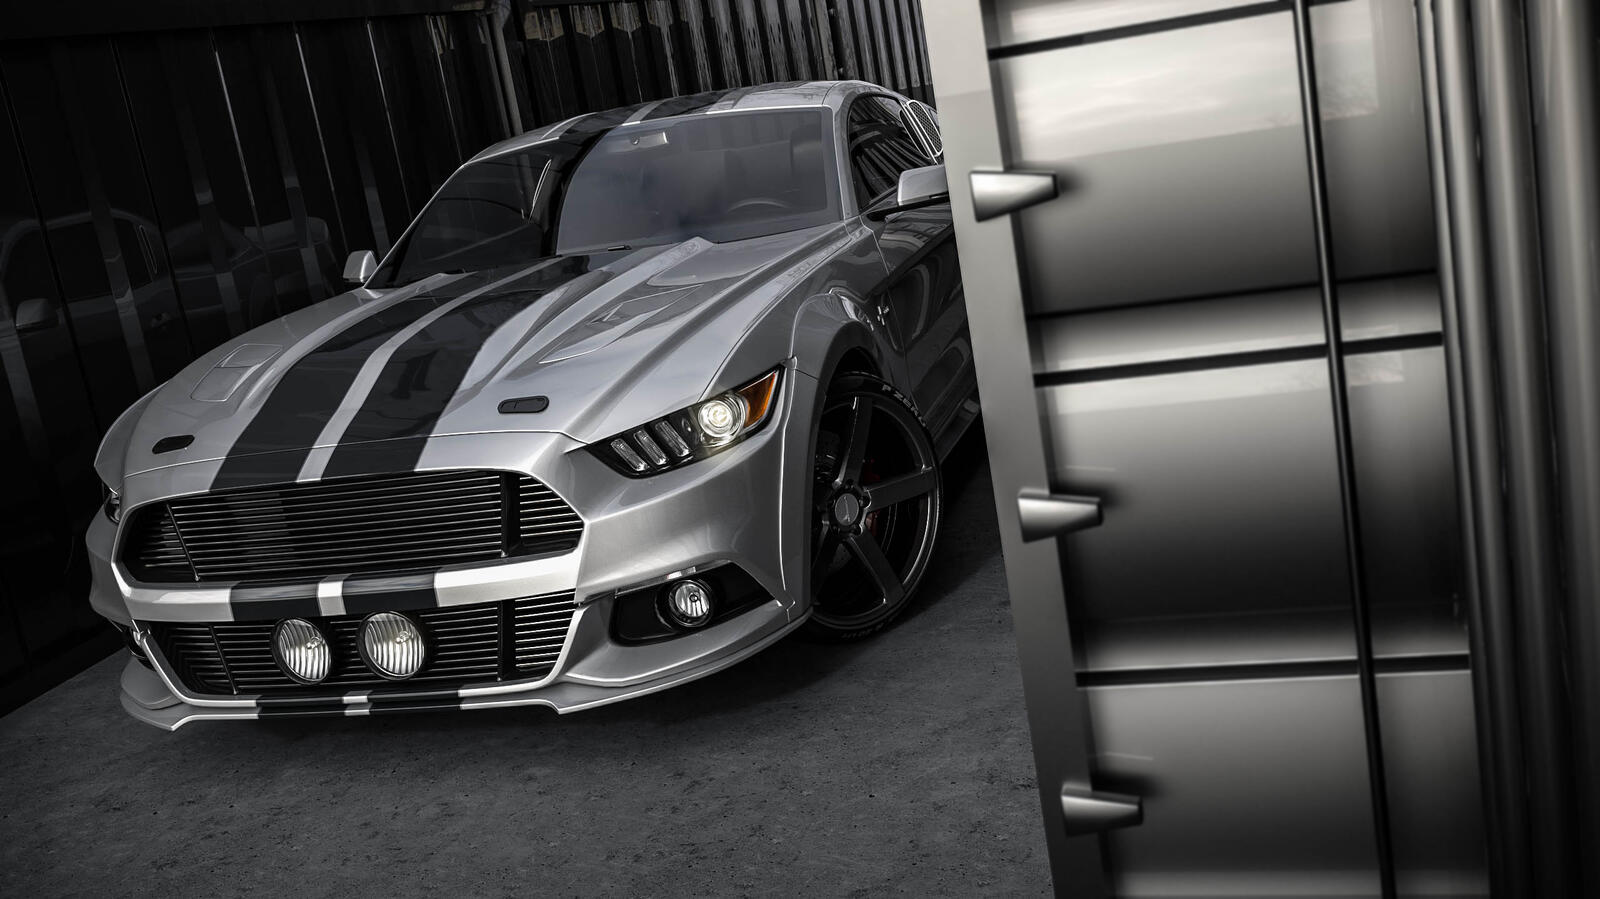 Wallpapers Mustang cars Behance on the desktop